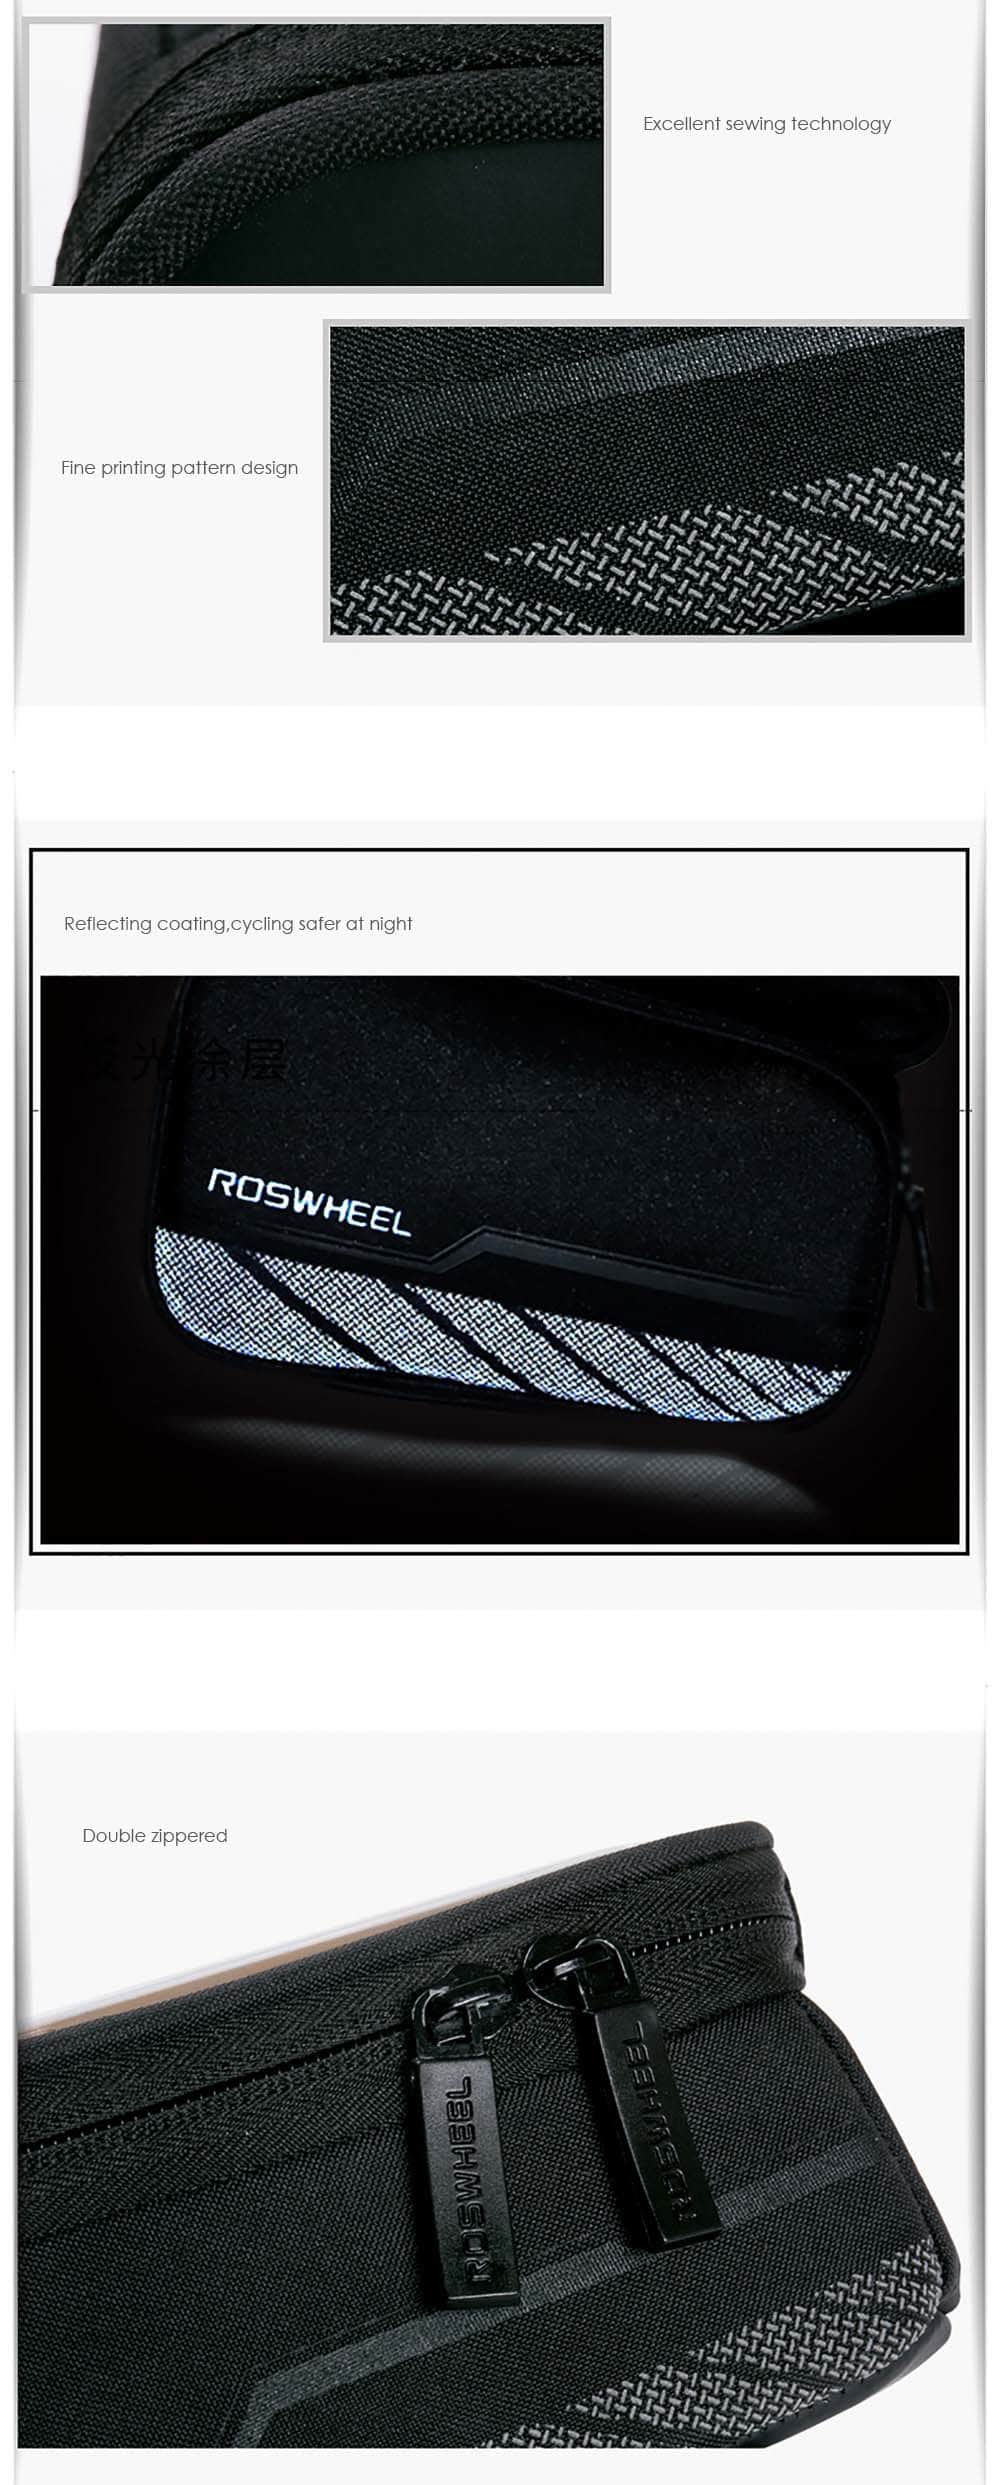 Roswheel Bike Touch Screen Tube Bag Phone Pocket Riding Cycling Supplies- Black L